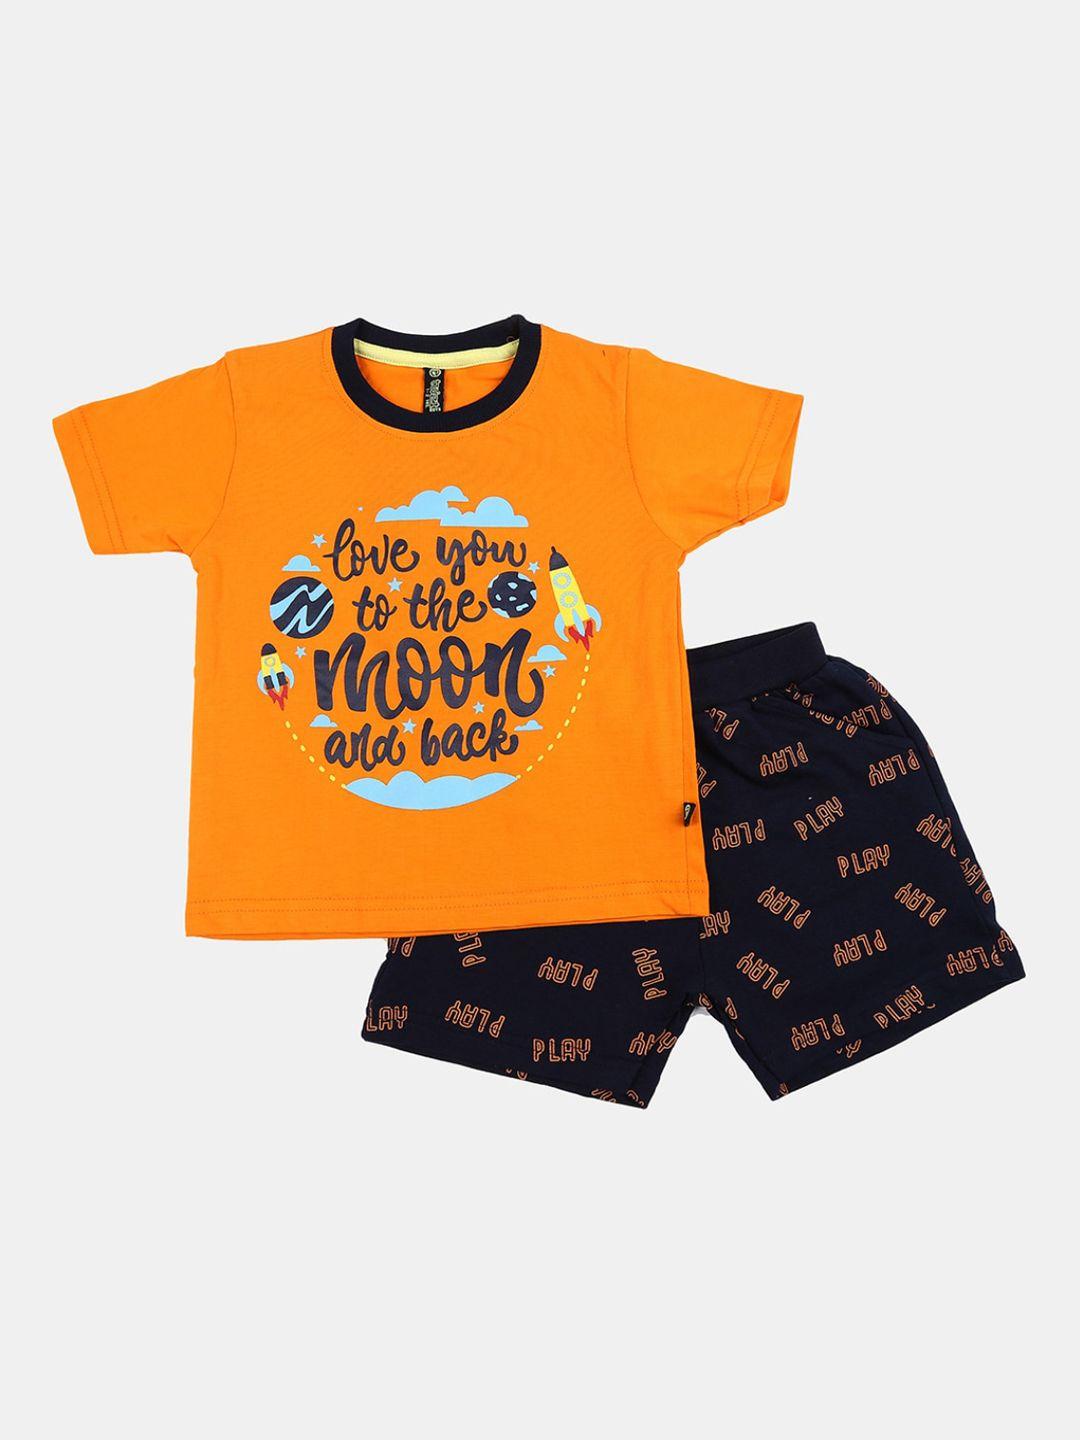 v-mart boys orange & black printed pure cotton t-shirt with shorts